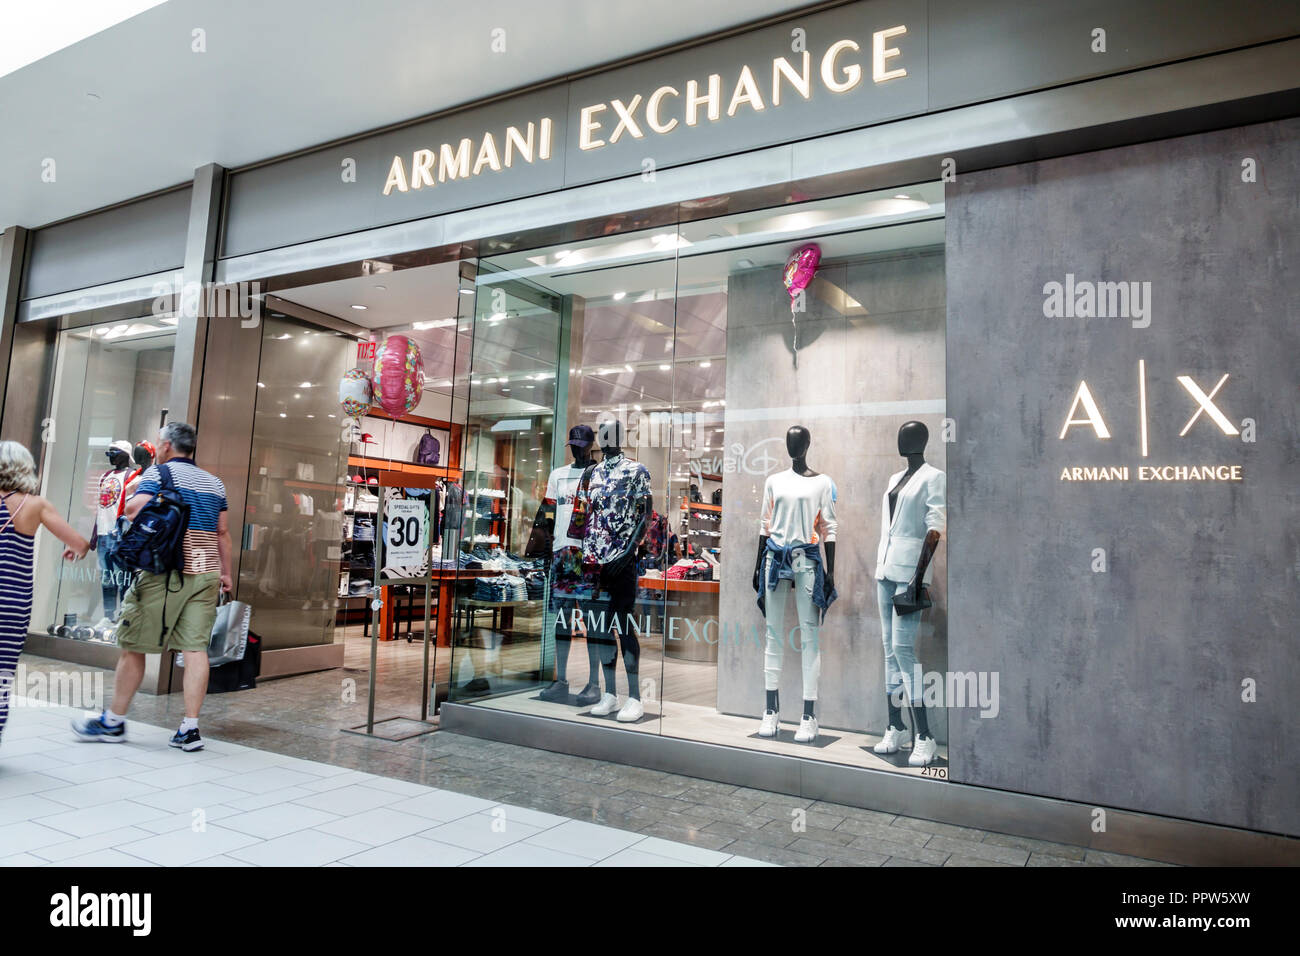 armani exchange galleria mall